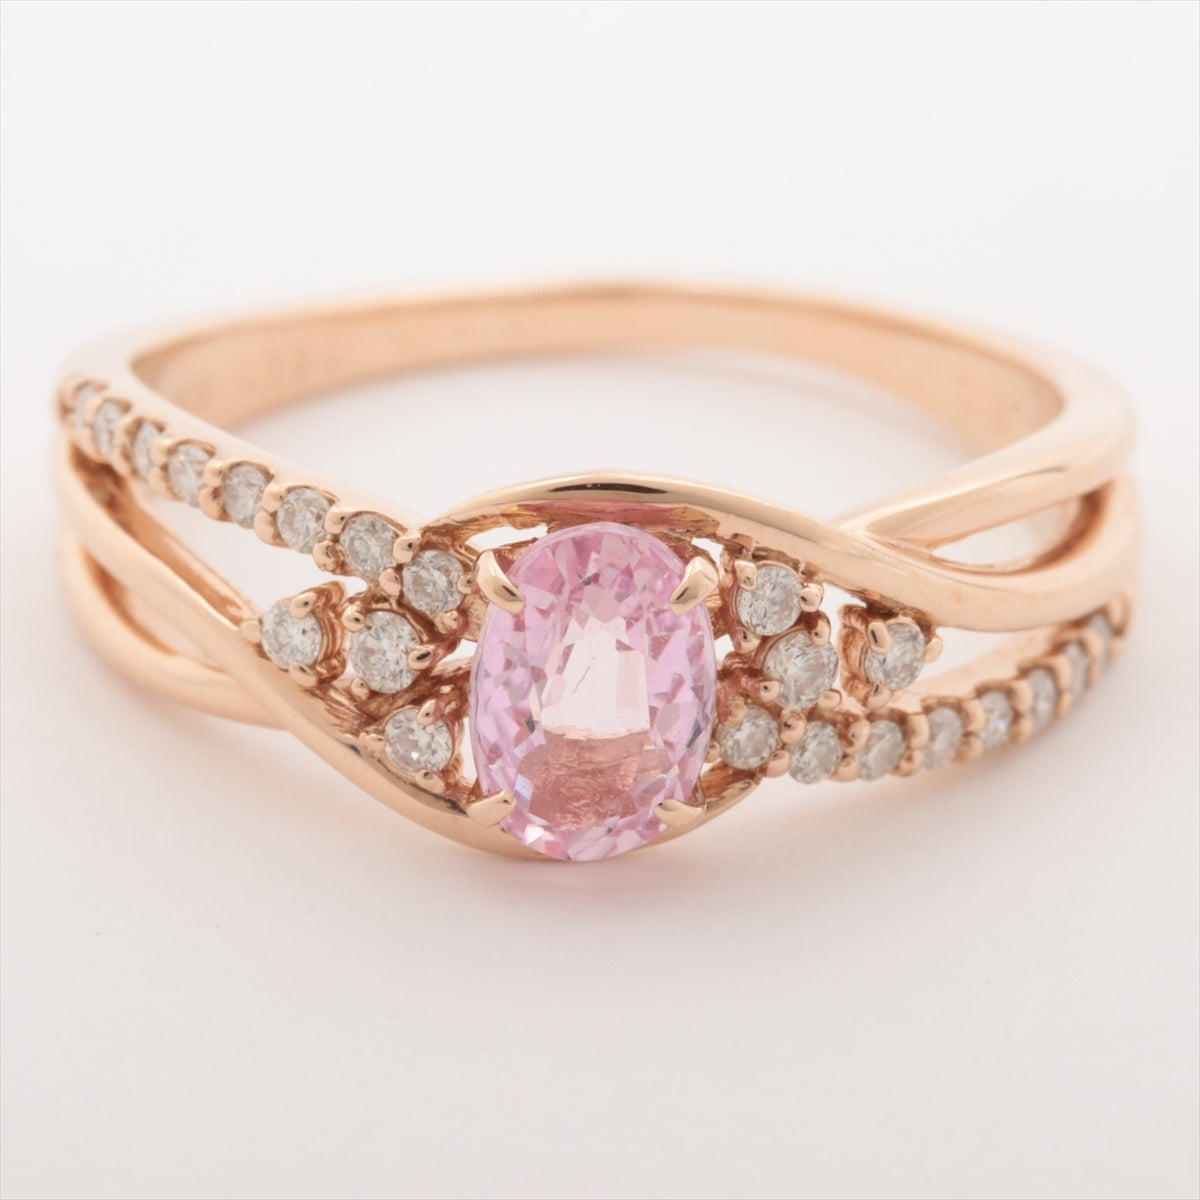 Pink sapphire Diamond Ring K18 3.4g 0.760 0.18 Normal heat-treated